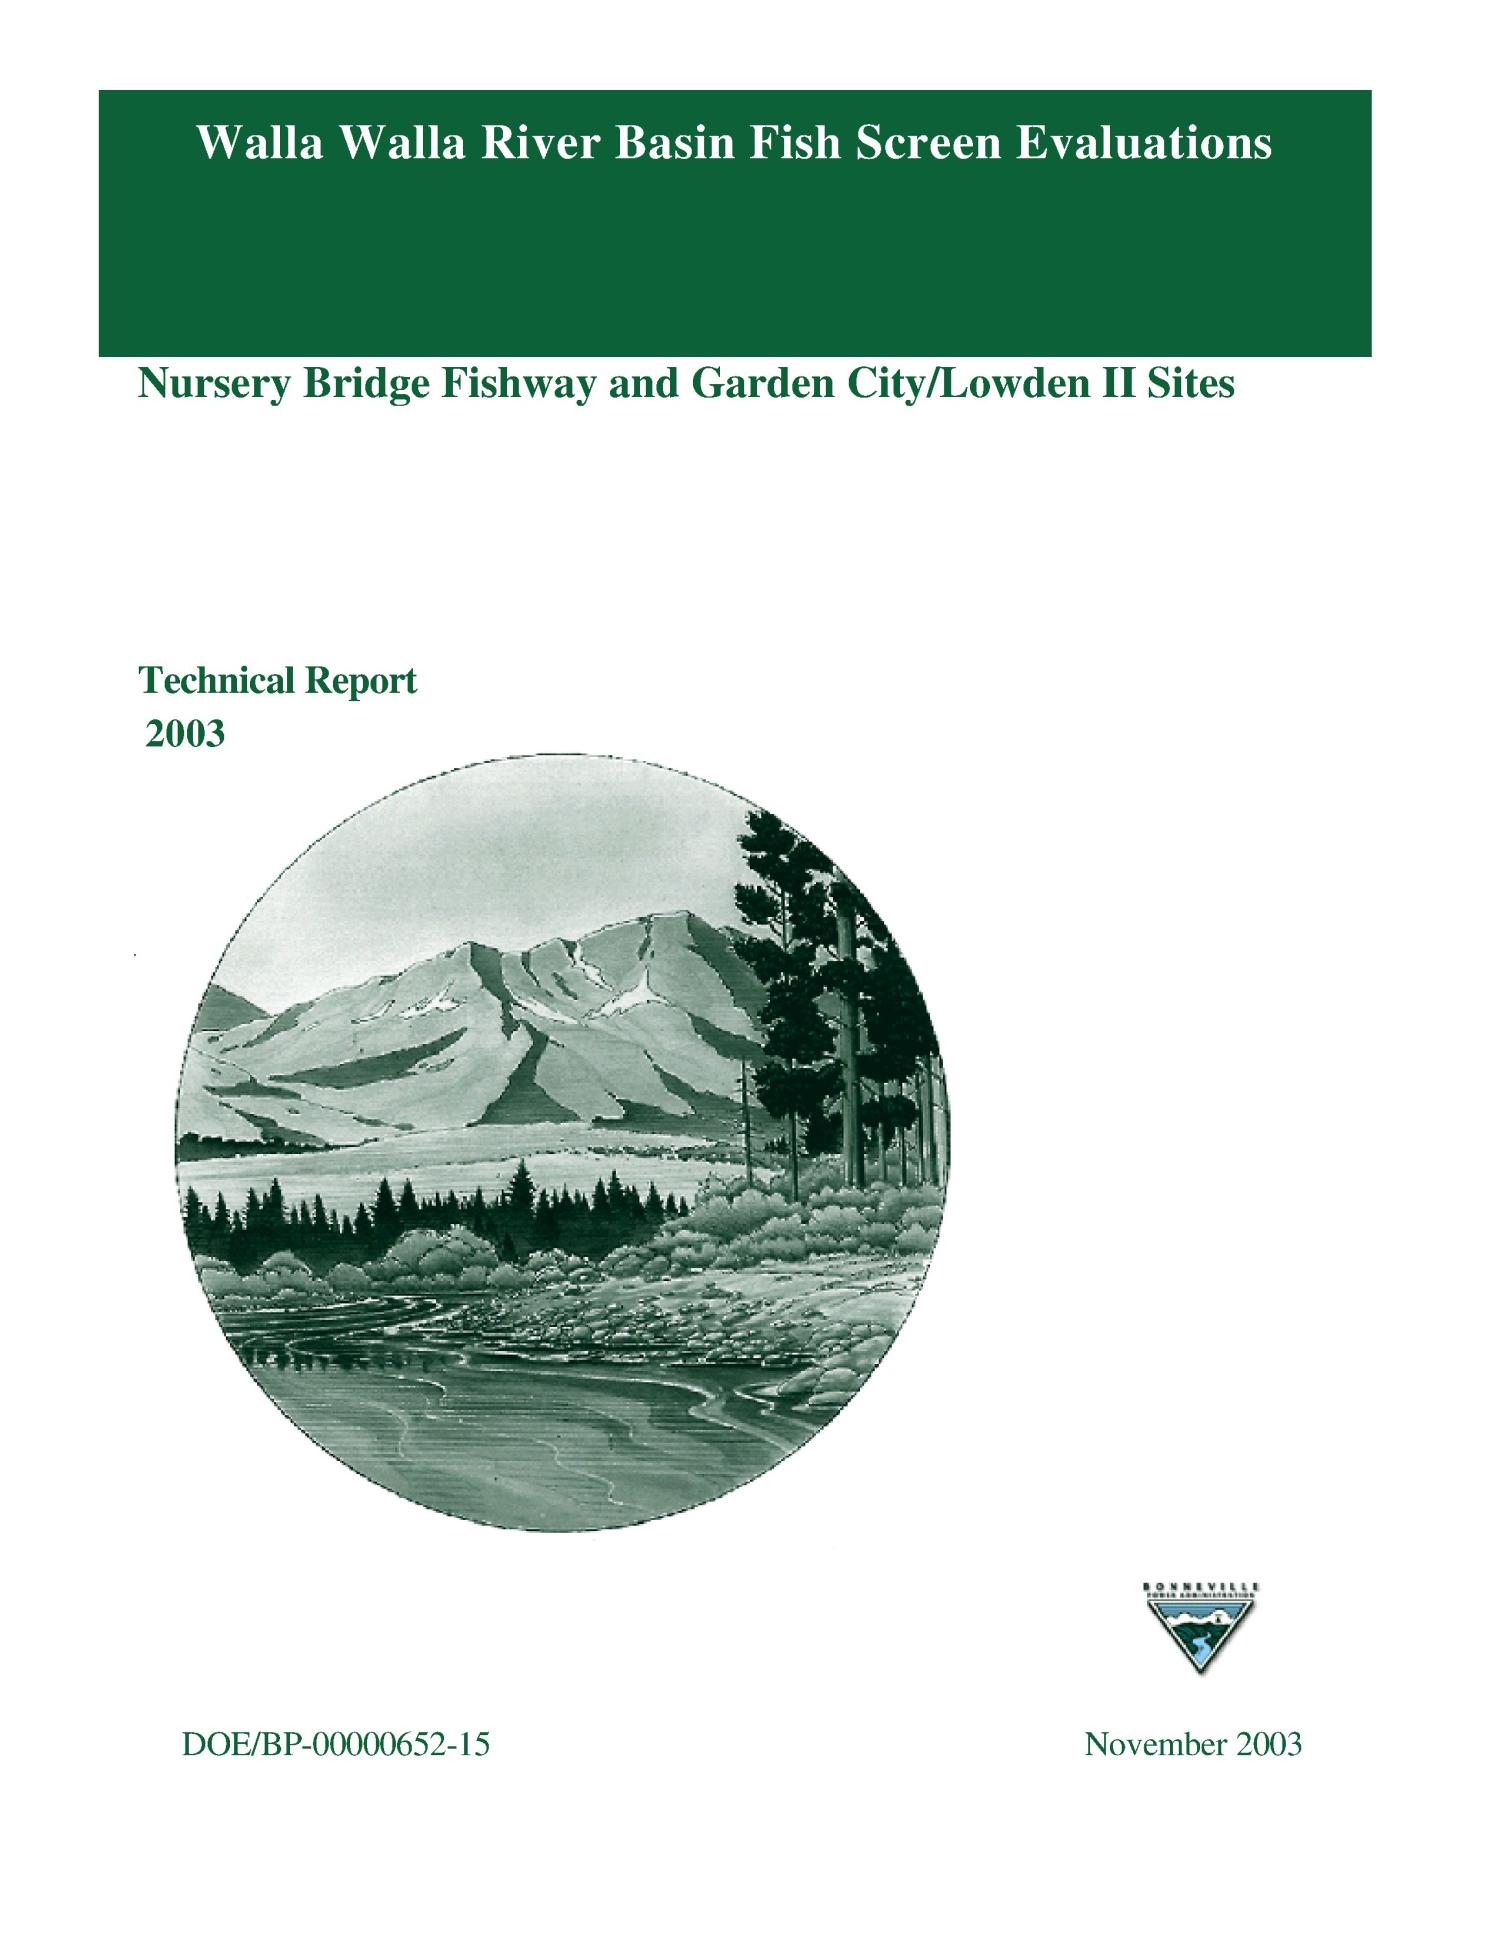 Walla Walla River Basin Fish Screen Evaluations; Nursery Bridge Fishway and Garden City/Lowden II Sites, 2003 Technical Report.
                                                
                                                    [Sequence #]: 1 of 32
                                                